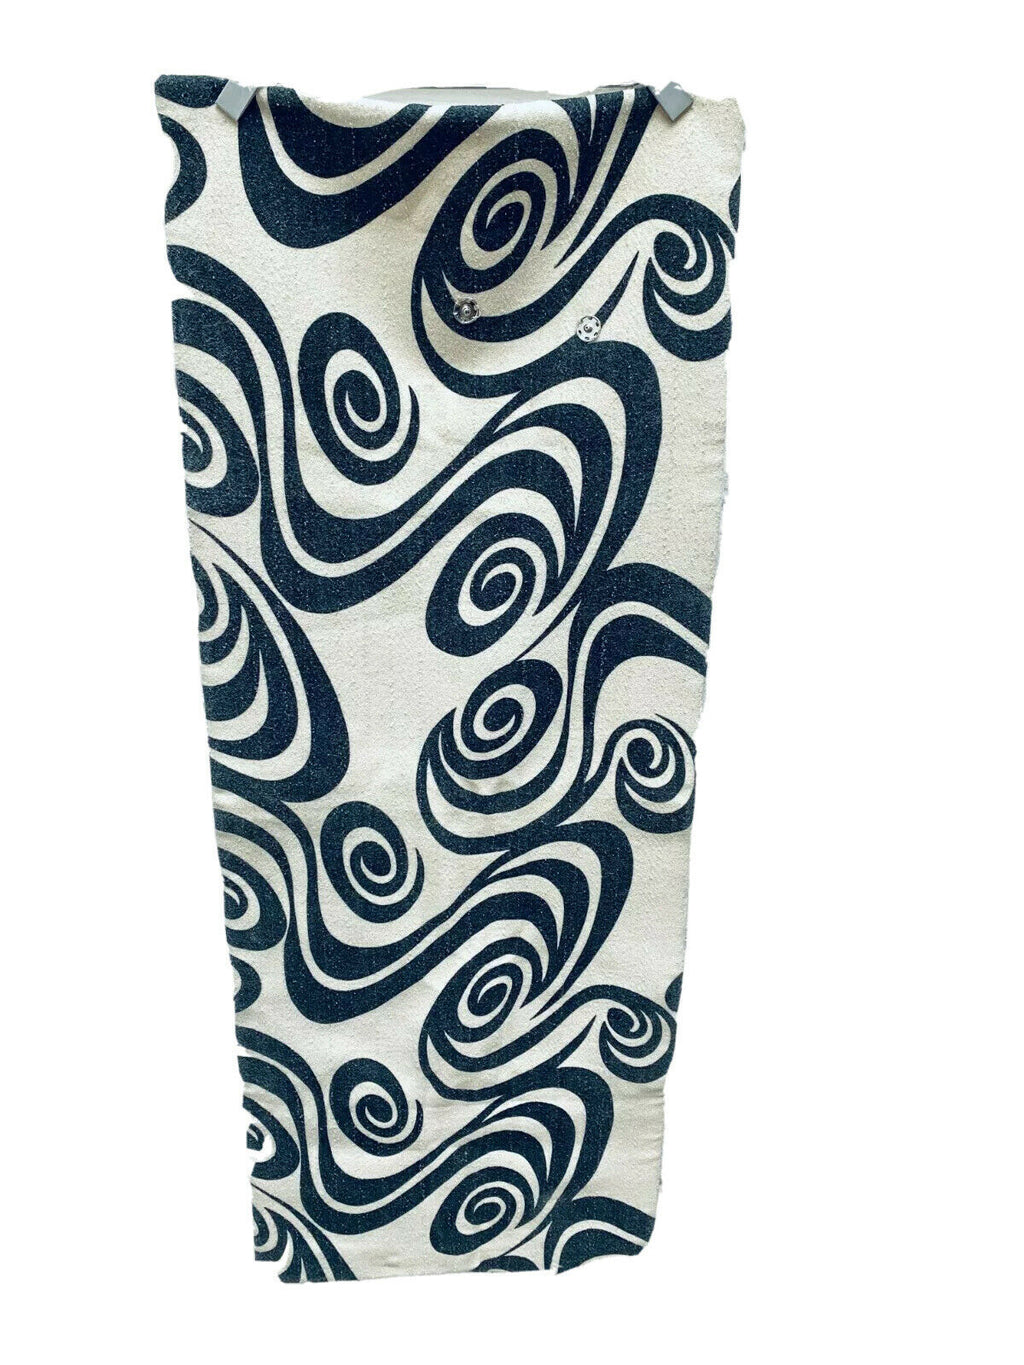 Acne Studios Intarsia Light beige snood / scarf Size O/S